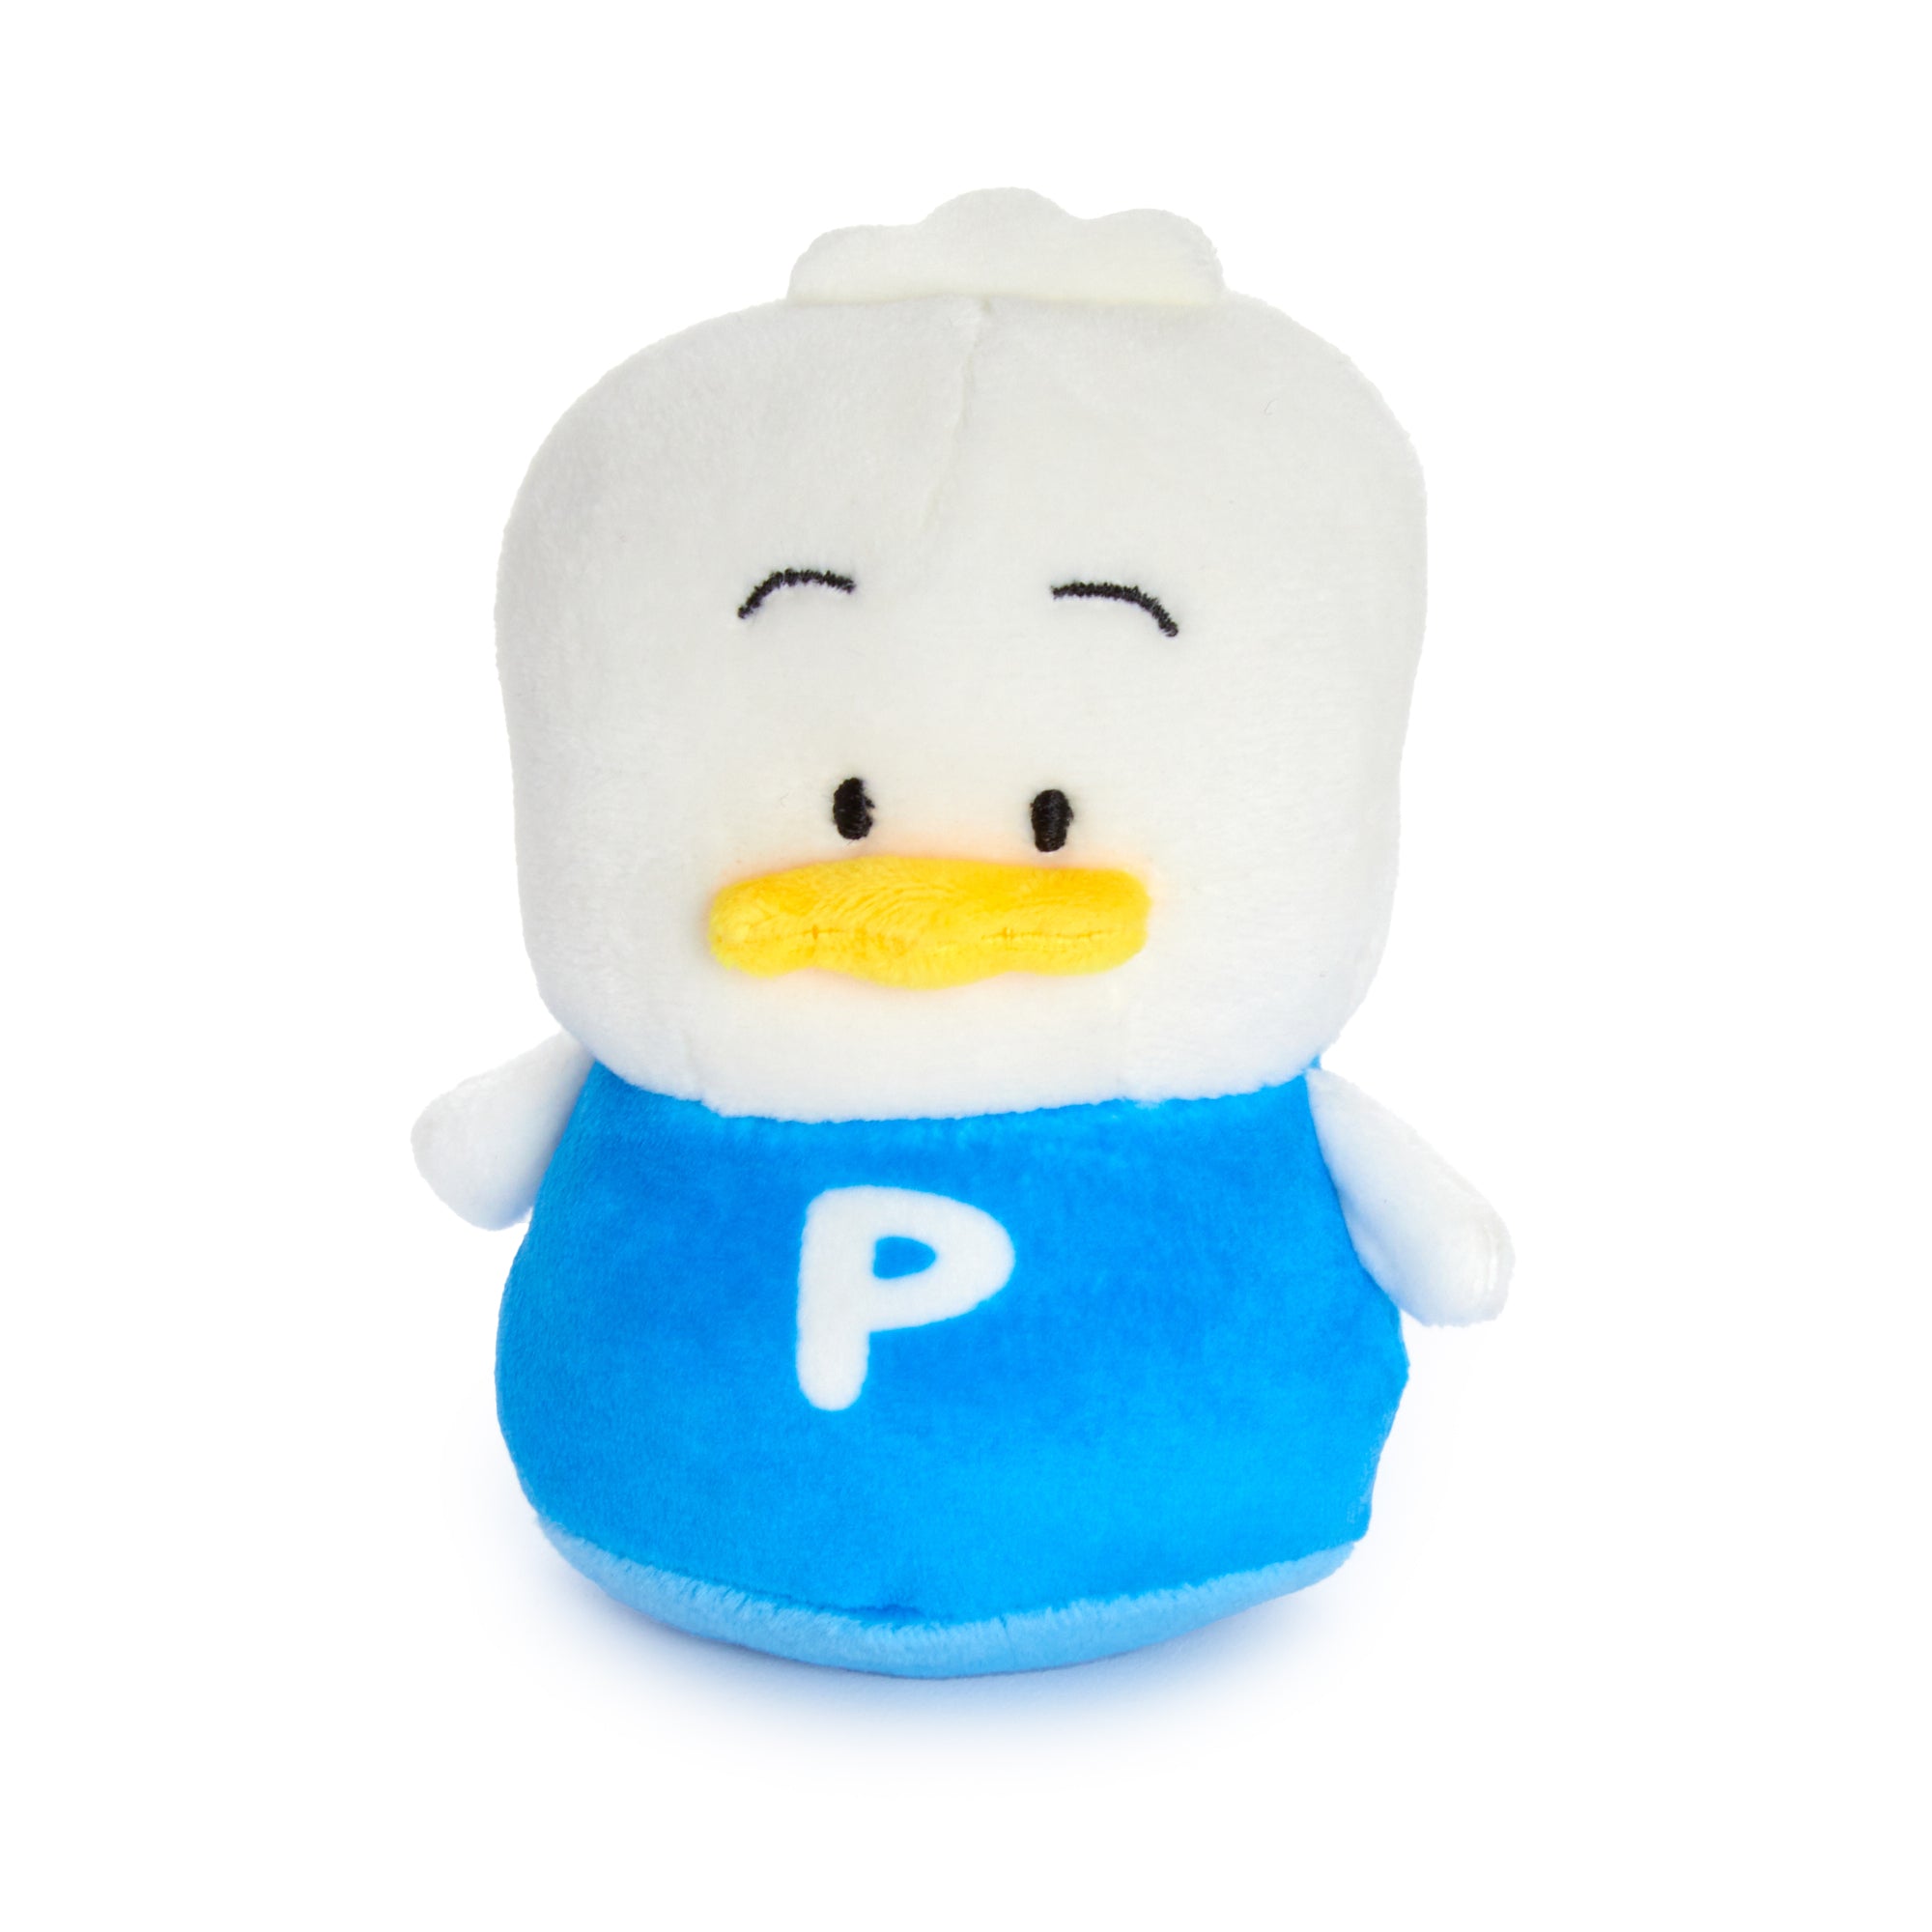 Pekkle Soft Mascot Plush Plush Japan Original   